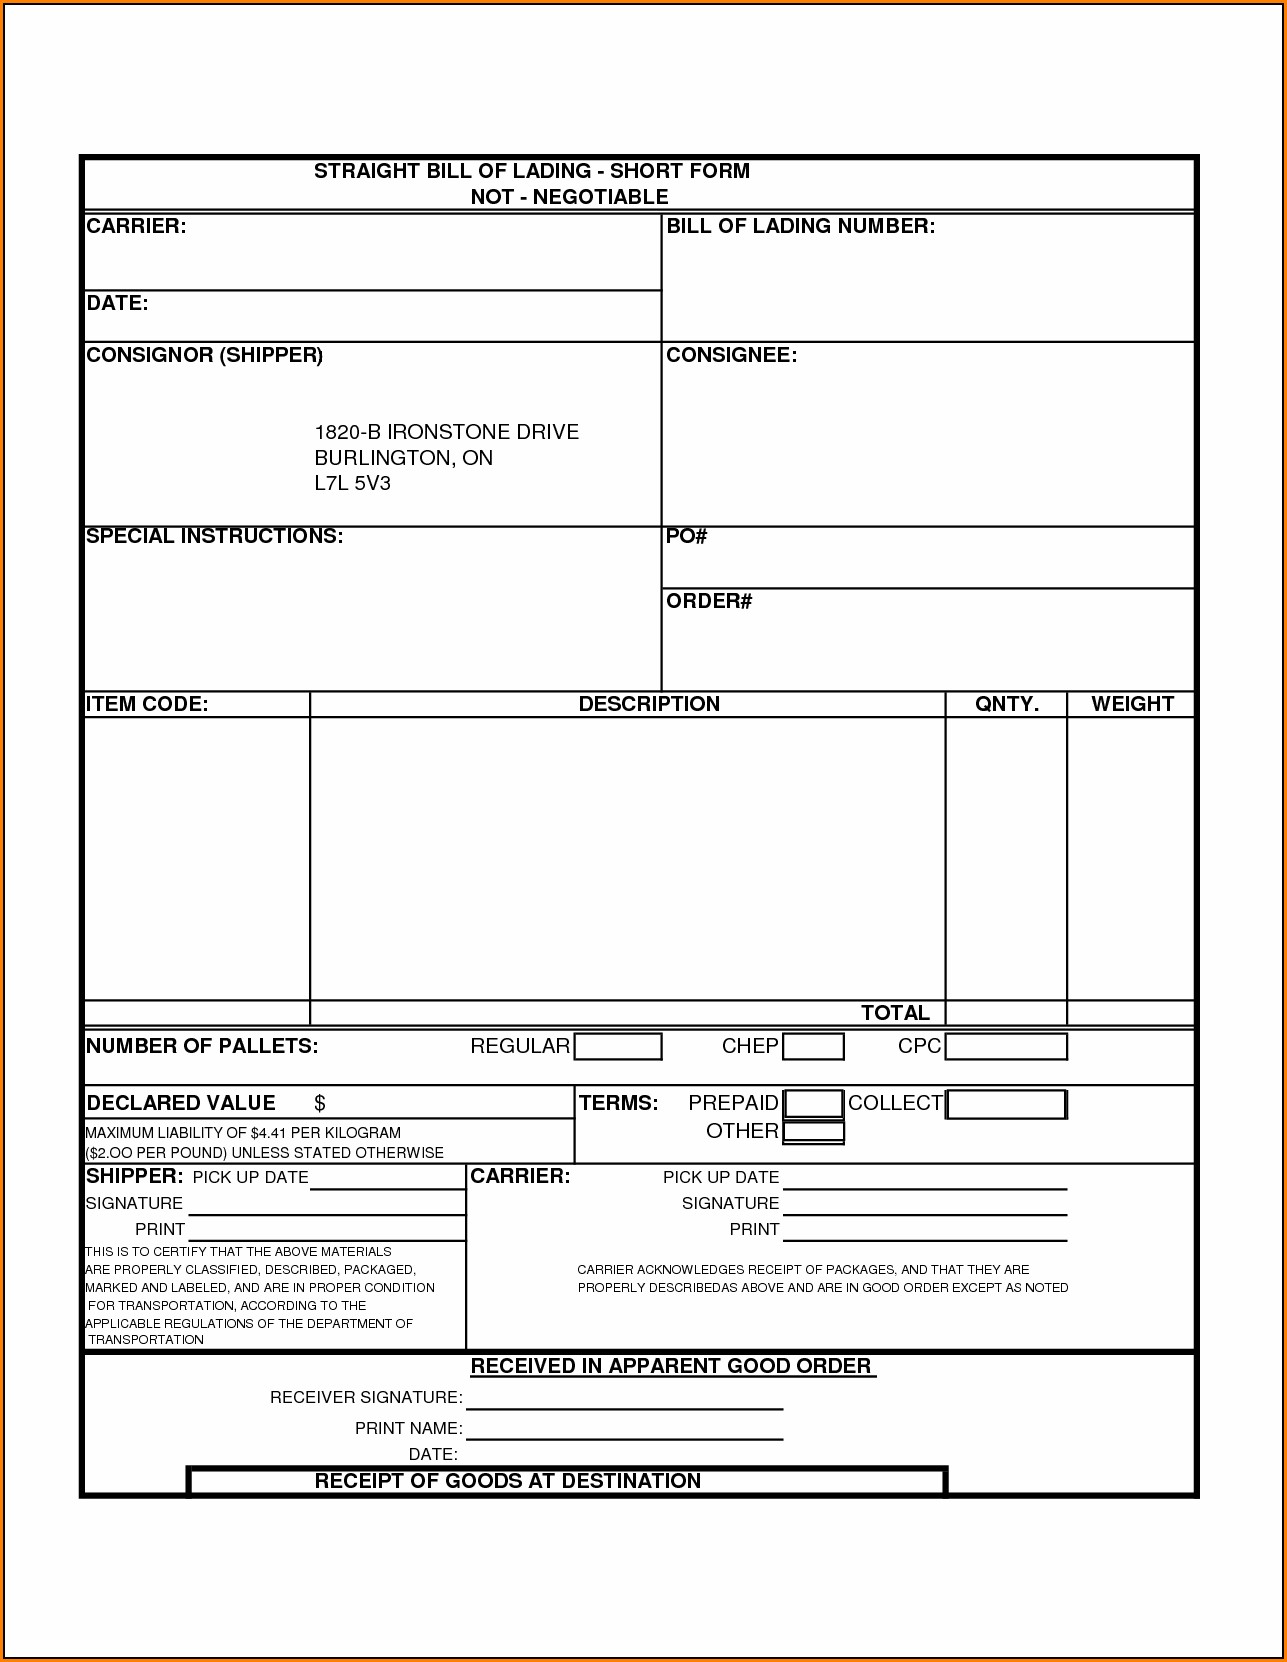 free-printable-straight-bill-of-lading-short-form-form-resume